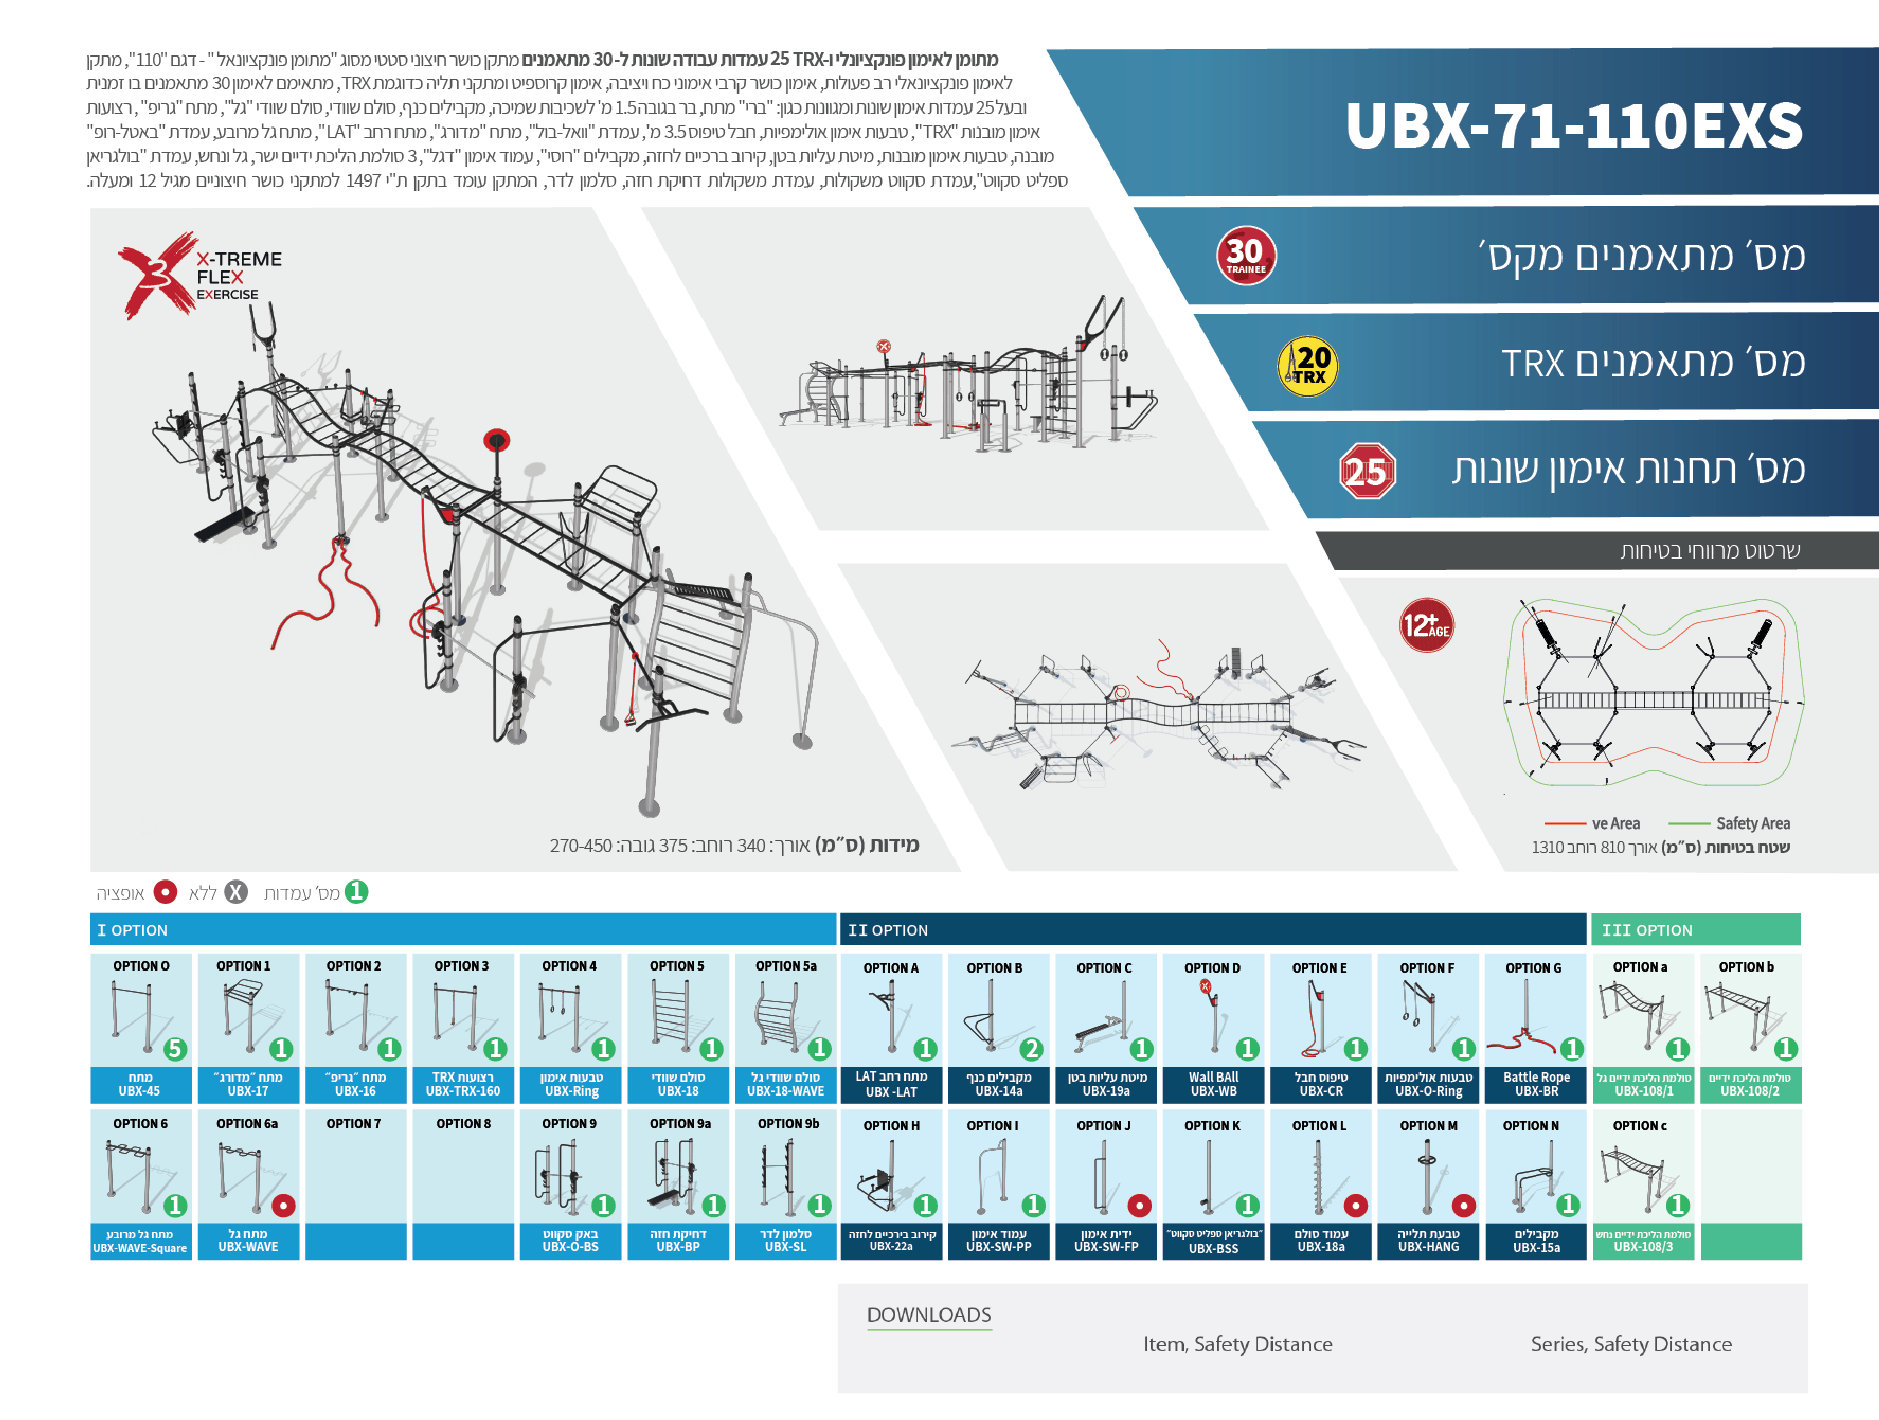 ubx-71-107 אורבניקס - מתקן כושר